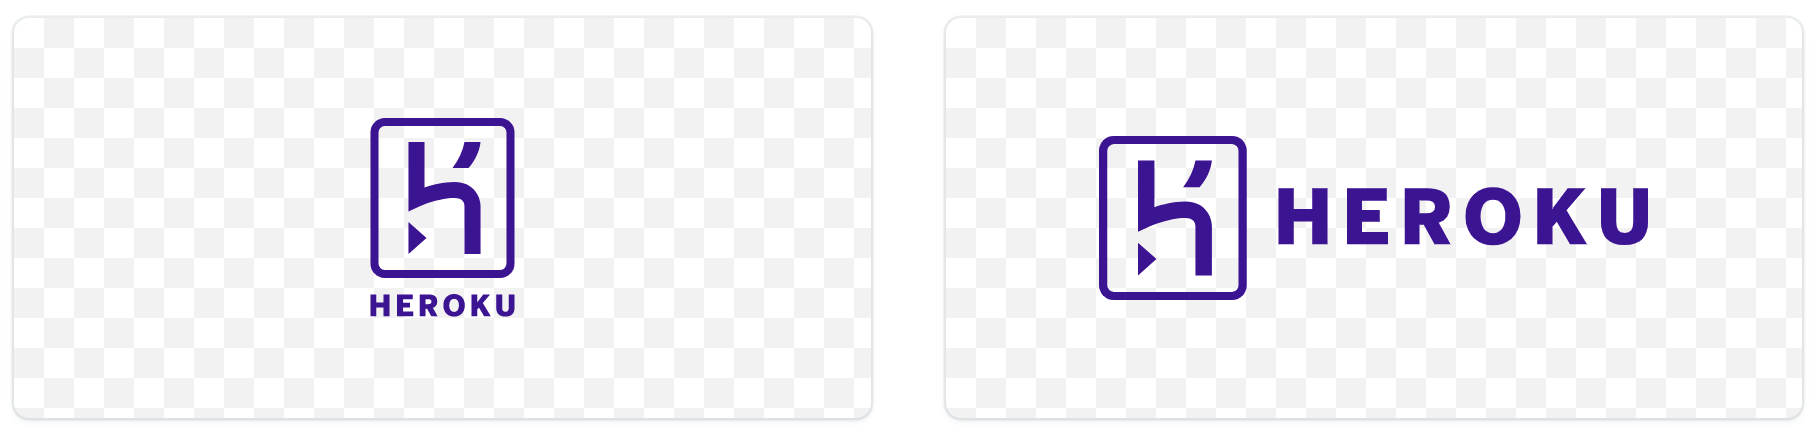 Heroku purple vertical (left) and horizontal (right) logotypes